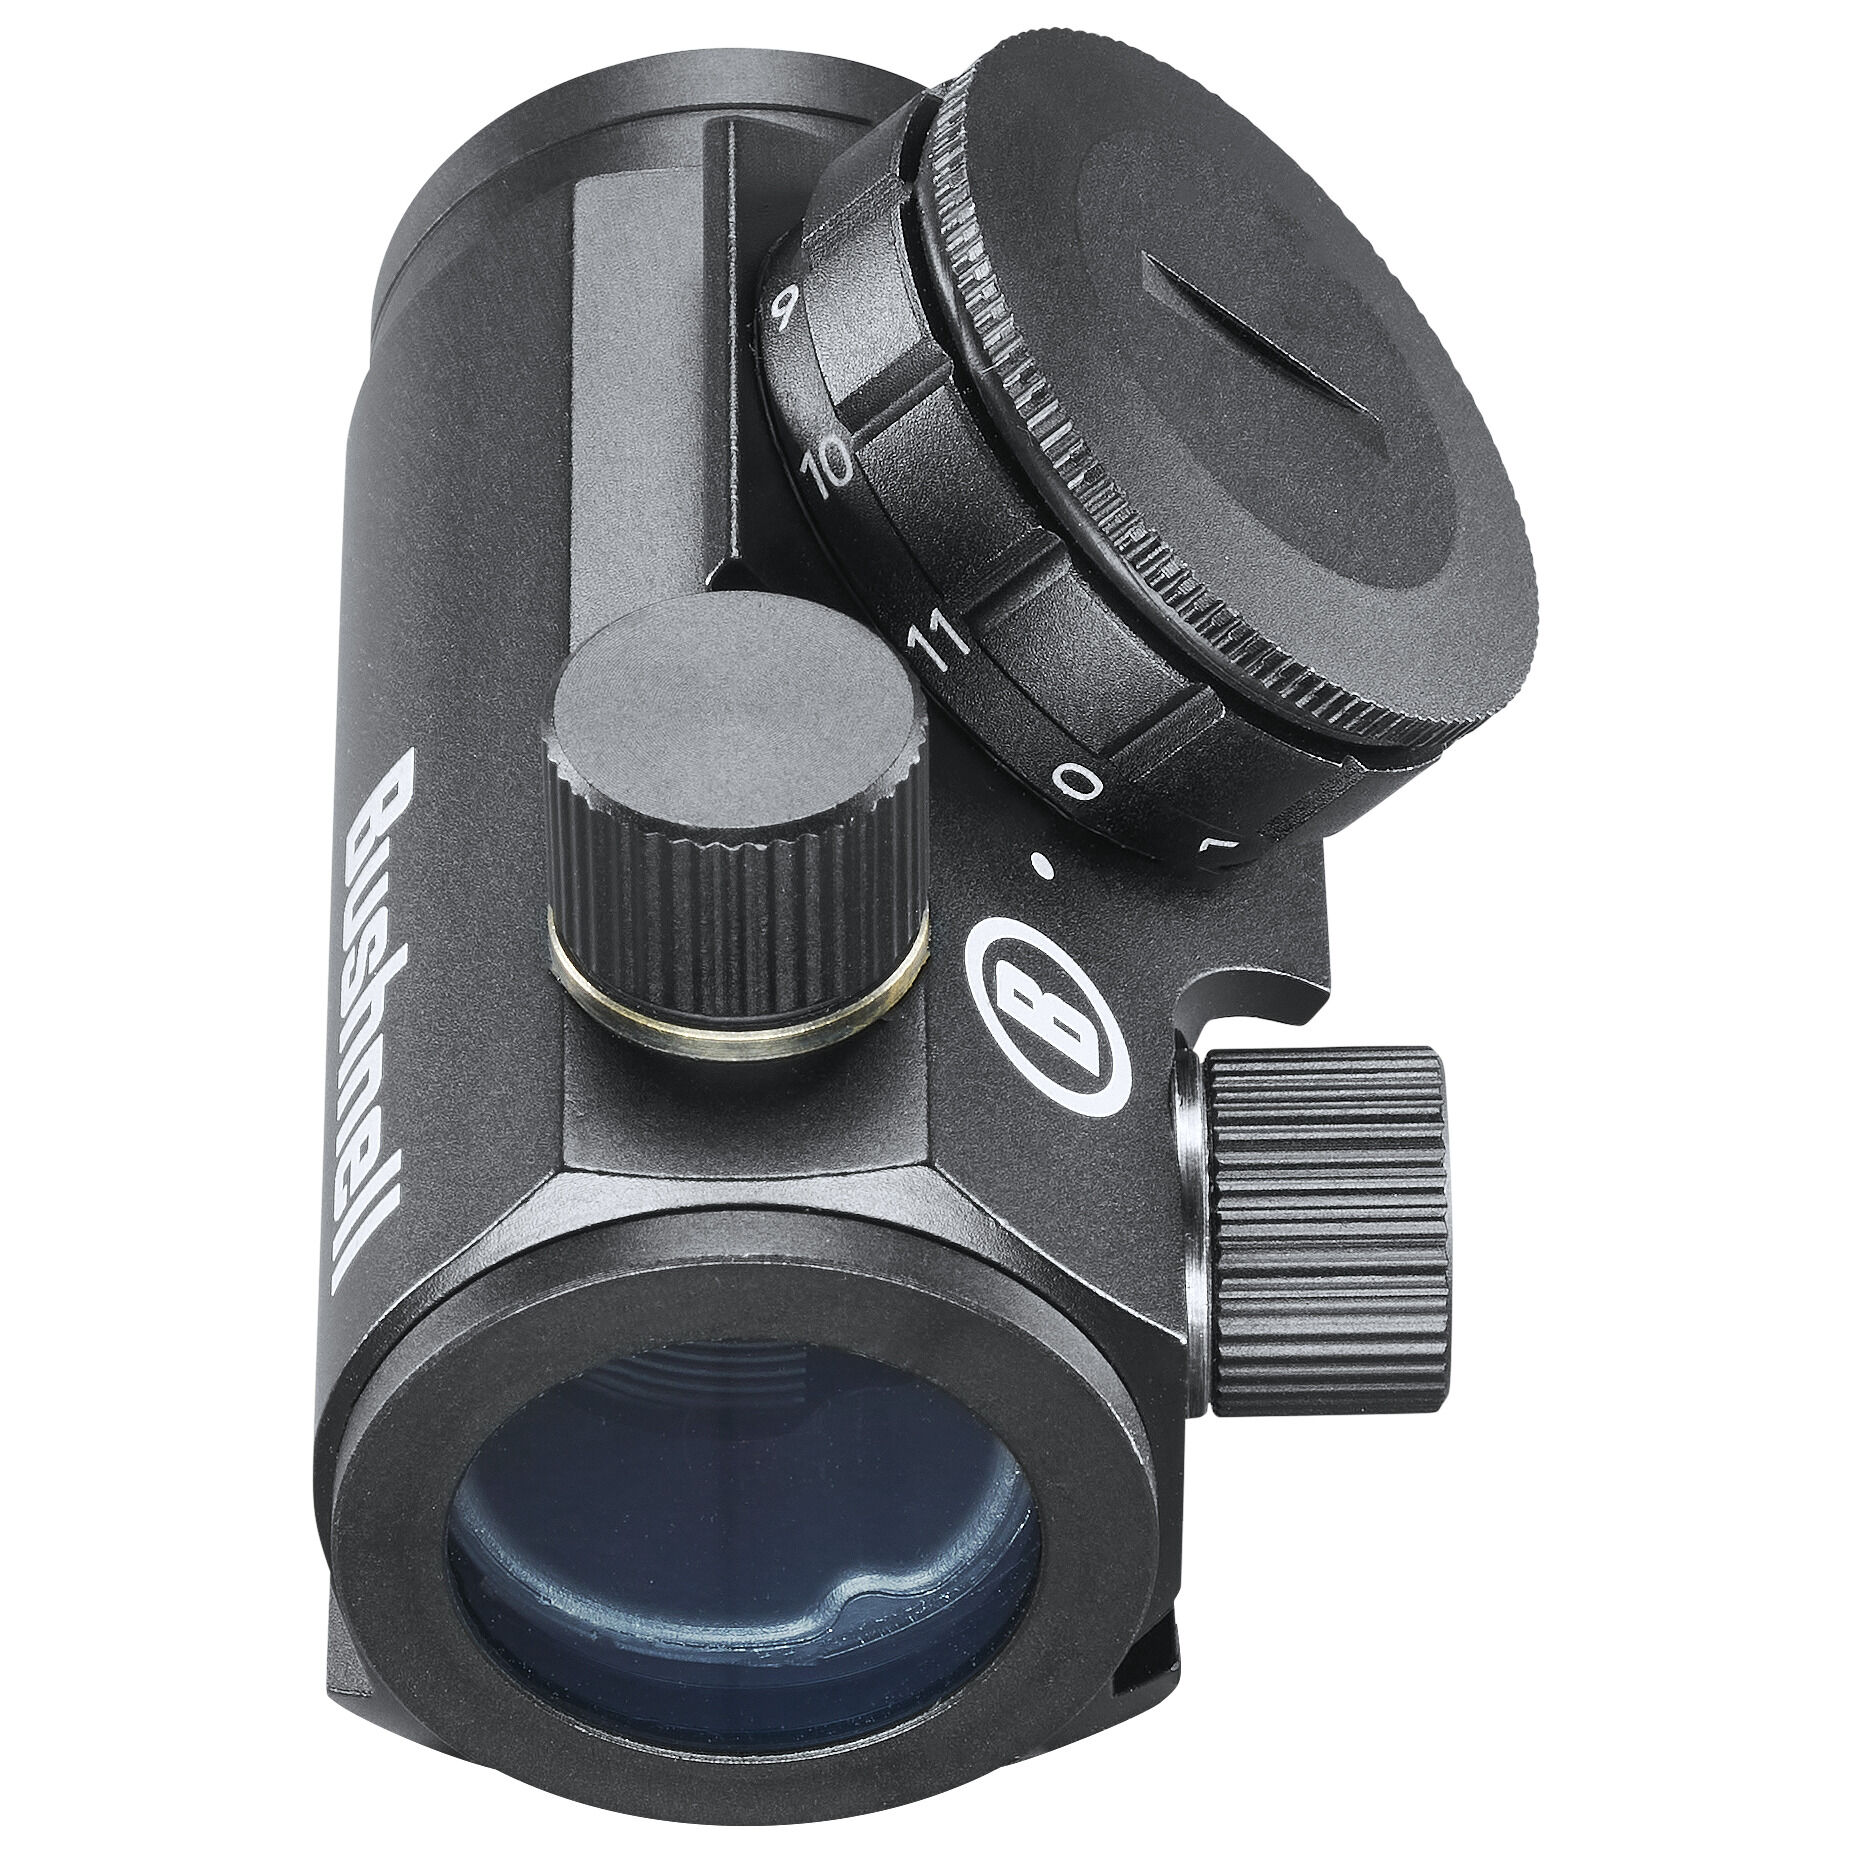 Bushnell-Trophy-TRS-25-Red-Dot-Sight-Riflescope-1-x-25mm-Black-100-NEW-731303 